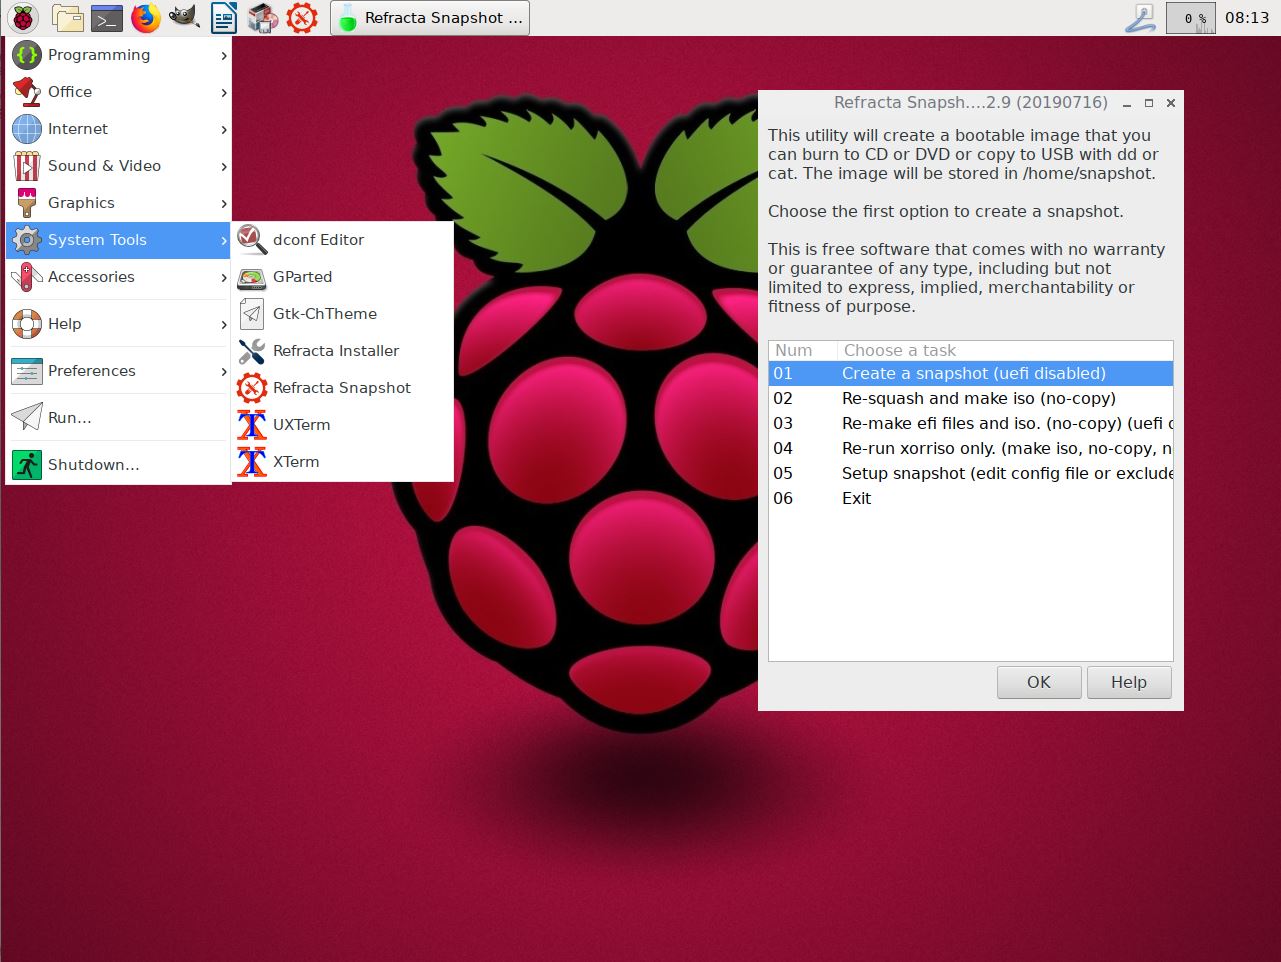 Fork do Raspbian PIXEL para PC e Mac agora é baseado no Debian 10